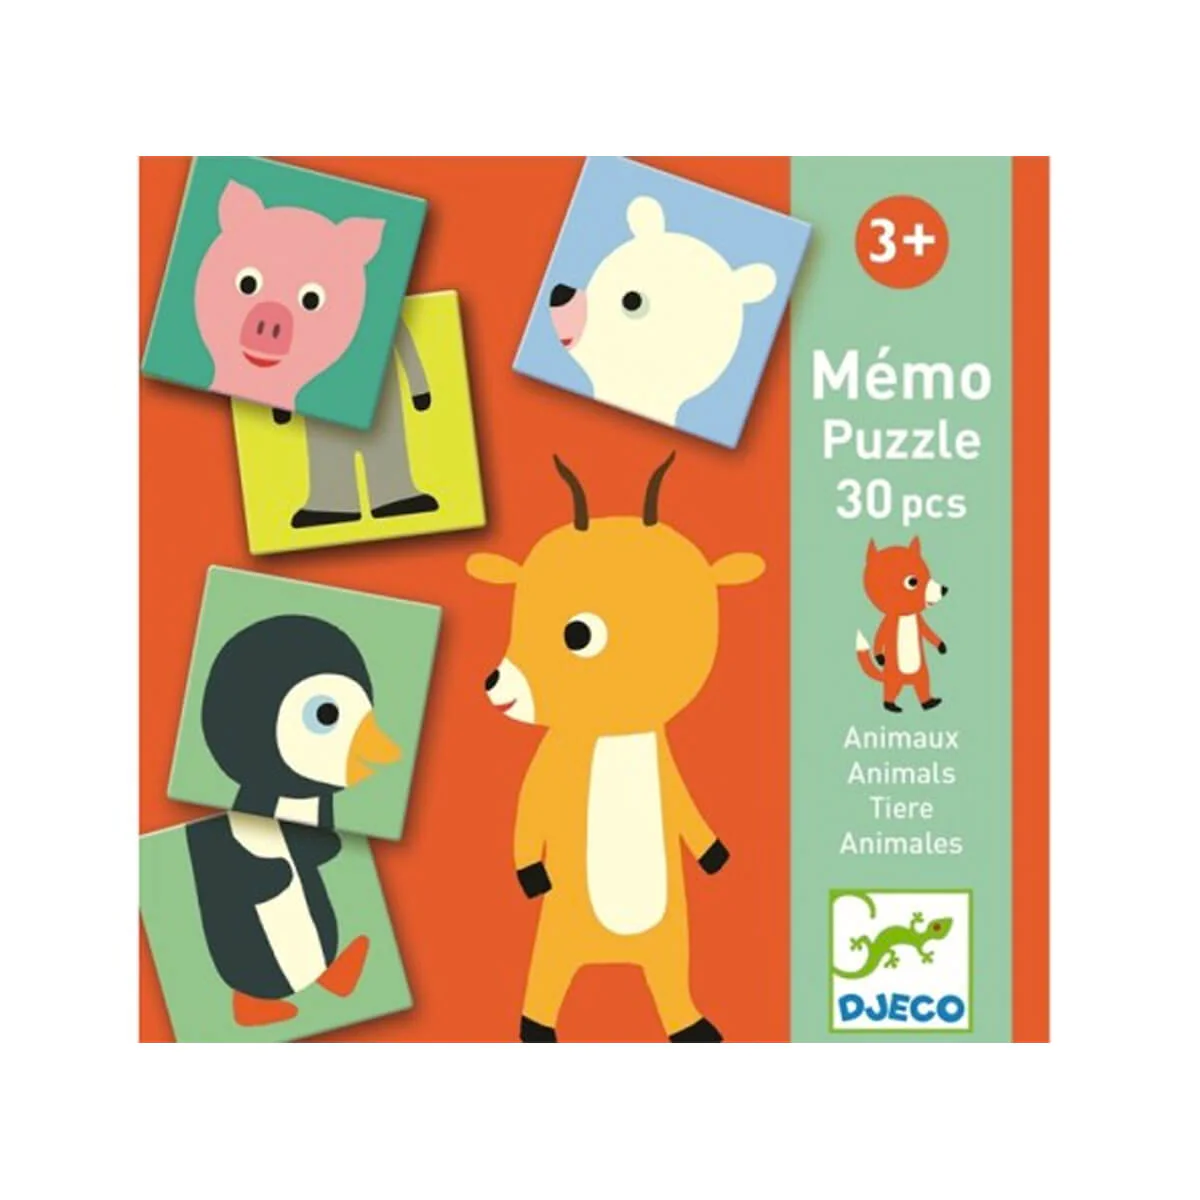 Memo puzzle animals by djeco